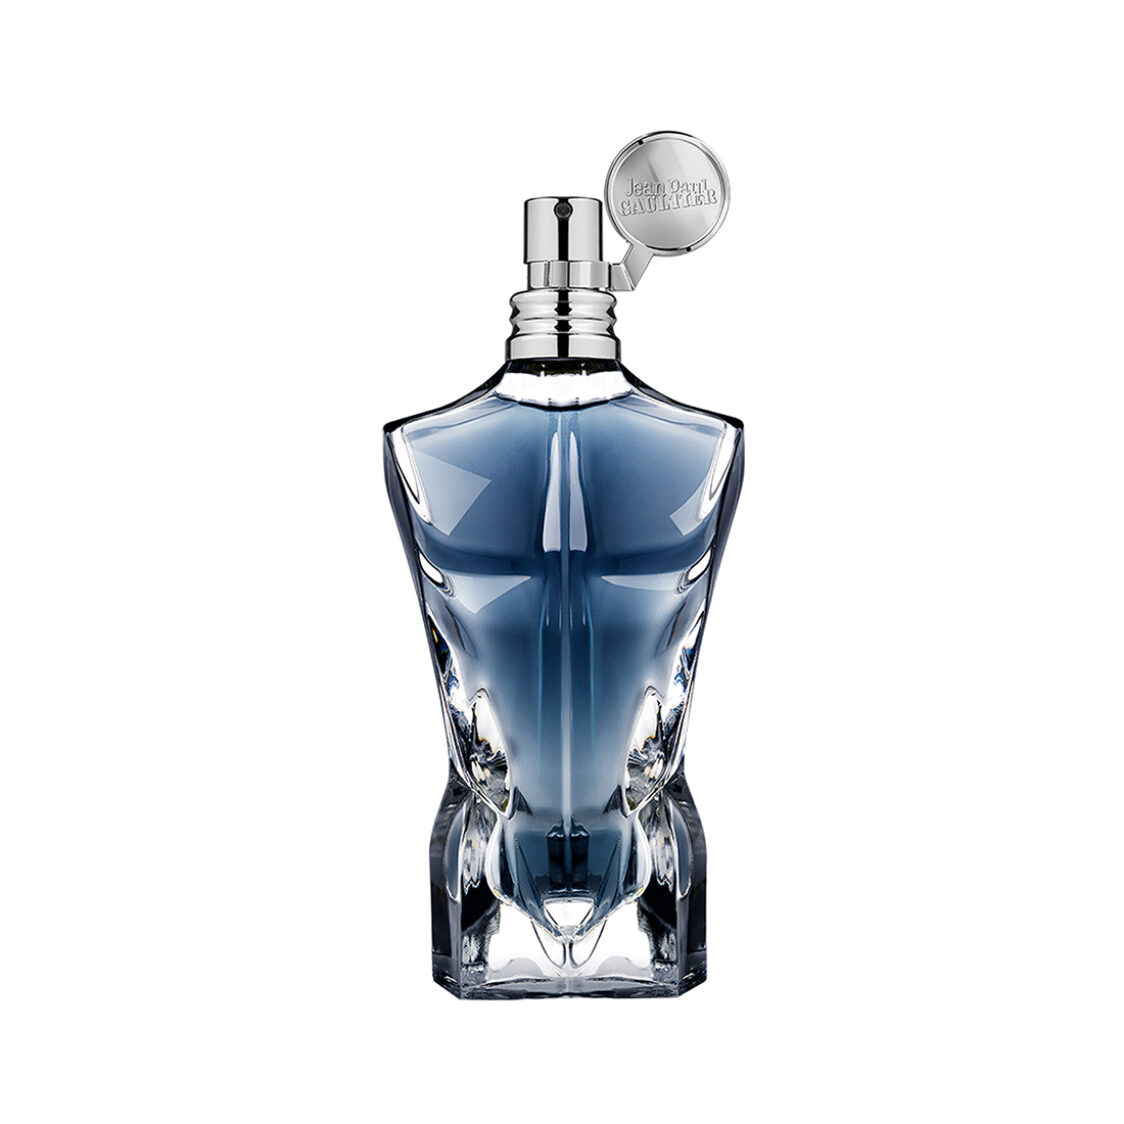 jean paul gaultier blue perfume